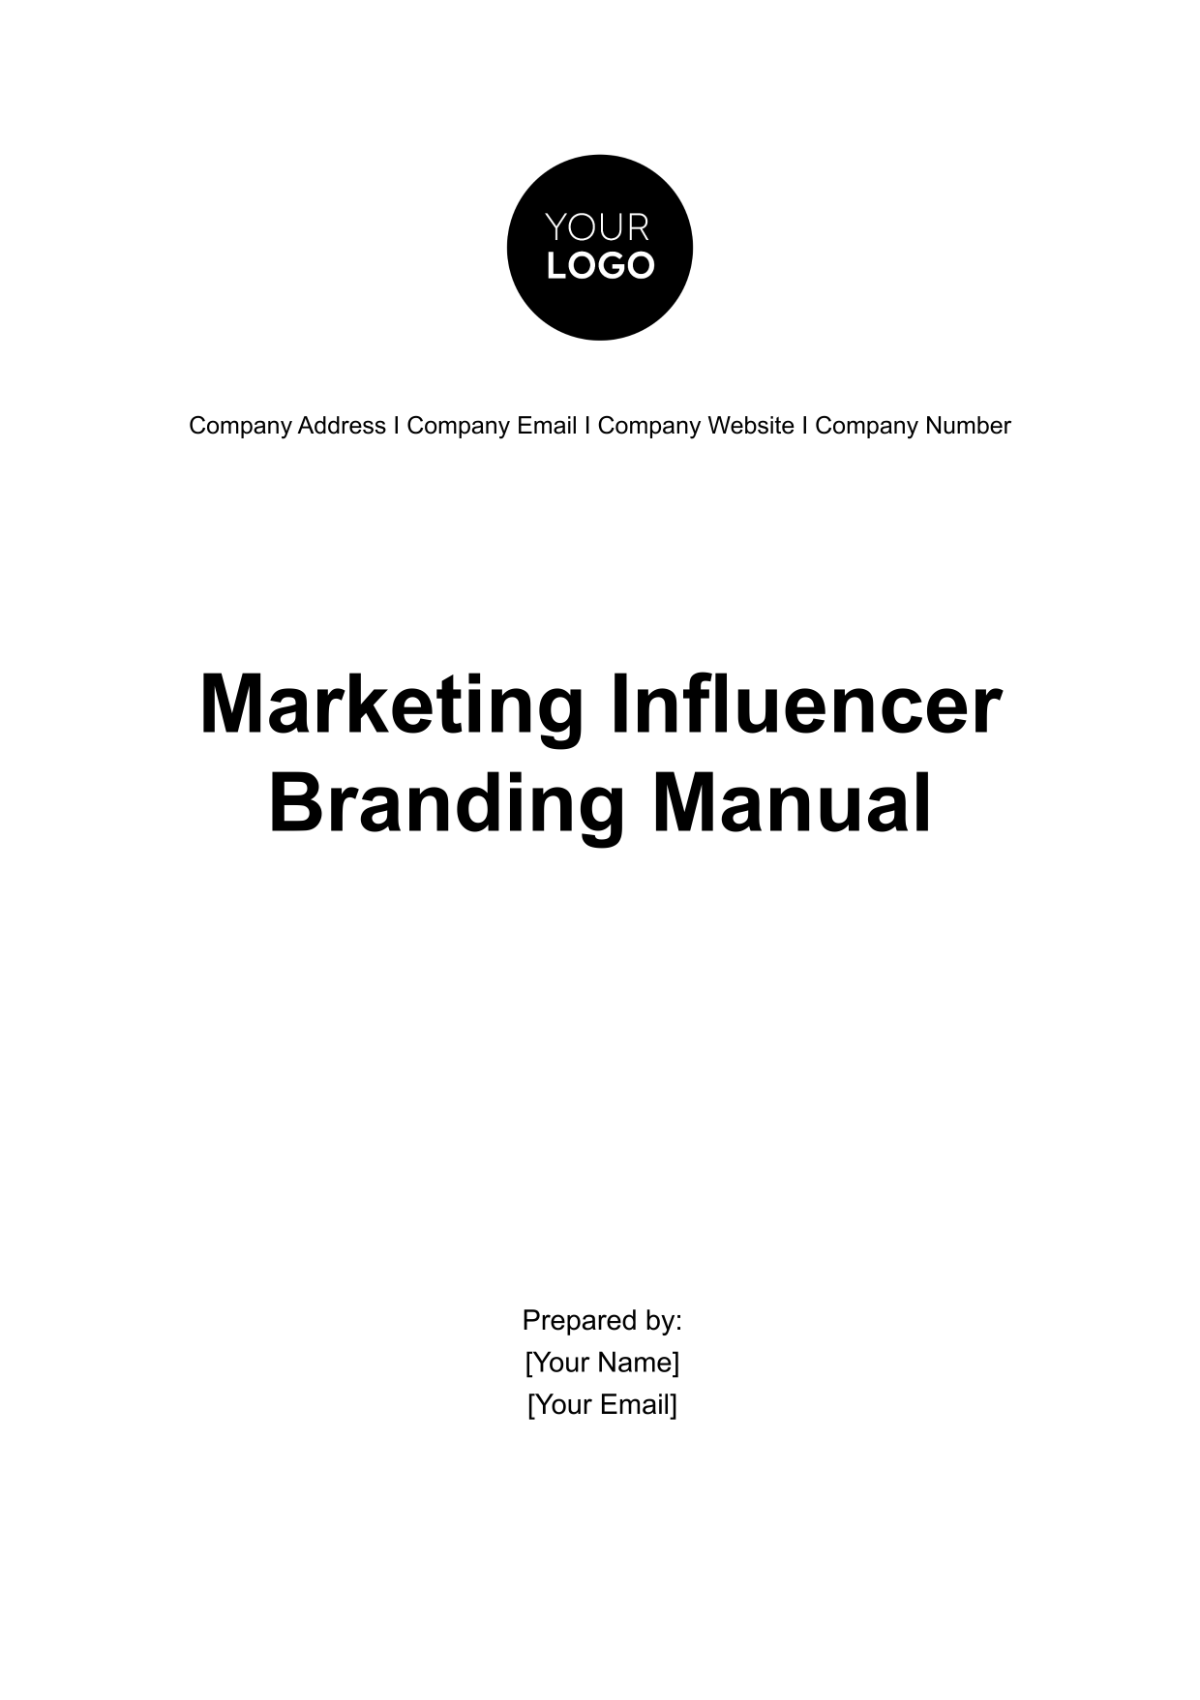 Free Marketing Influencer Branding Manual Template